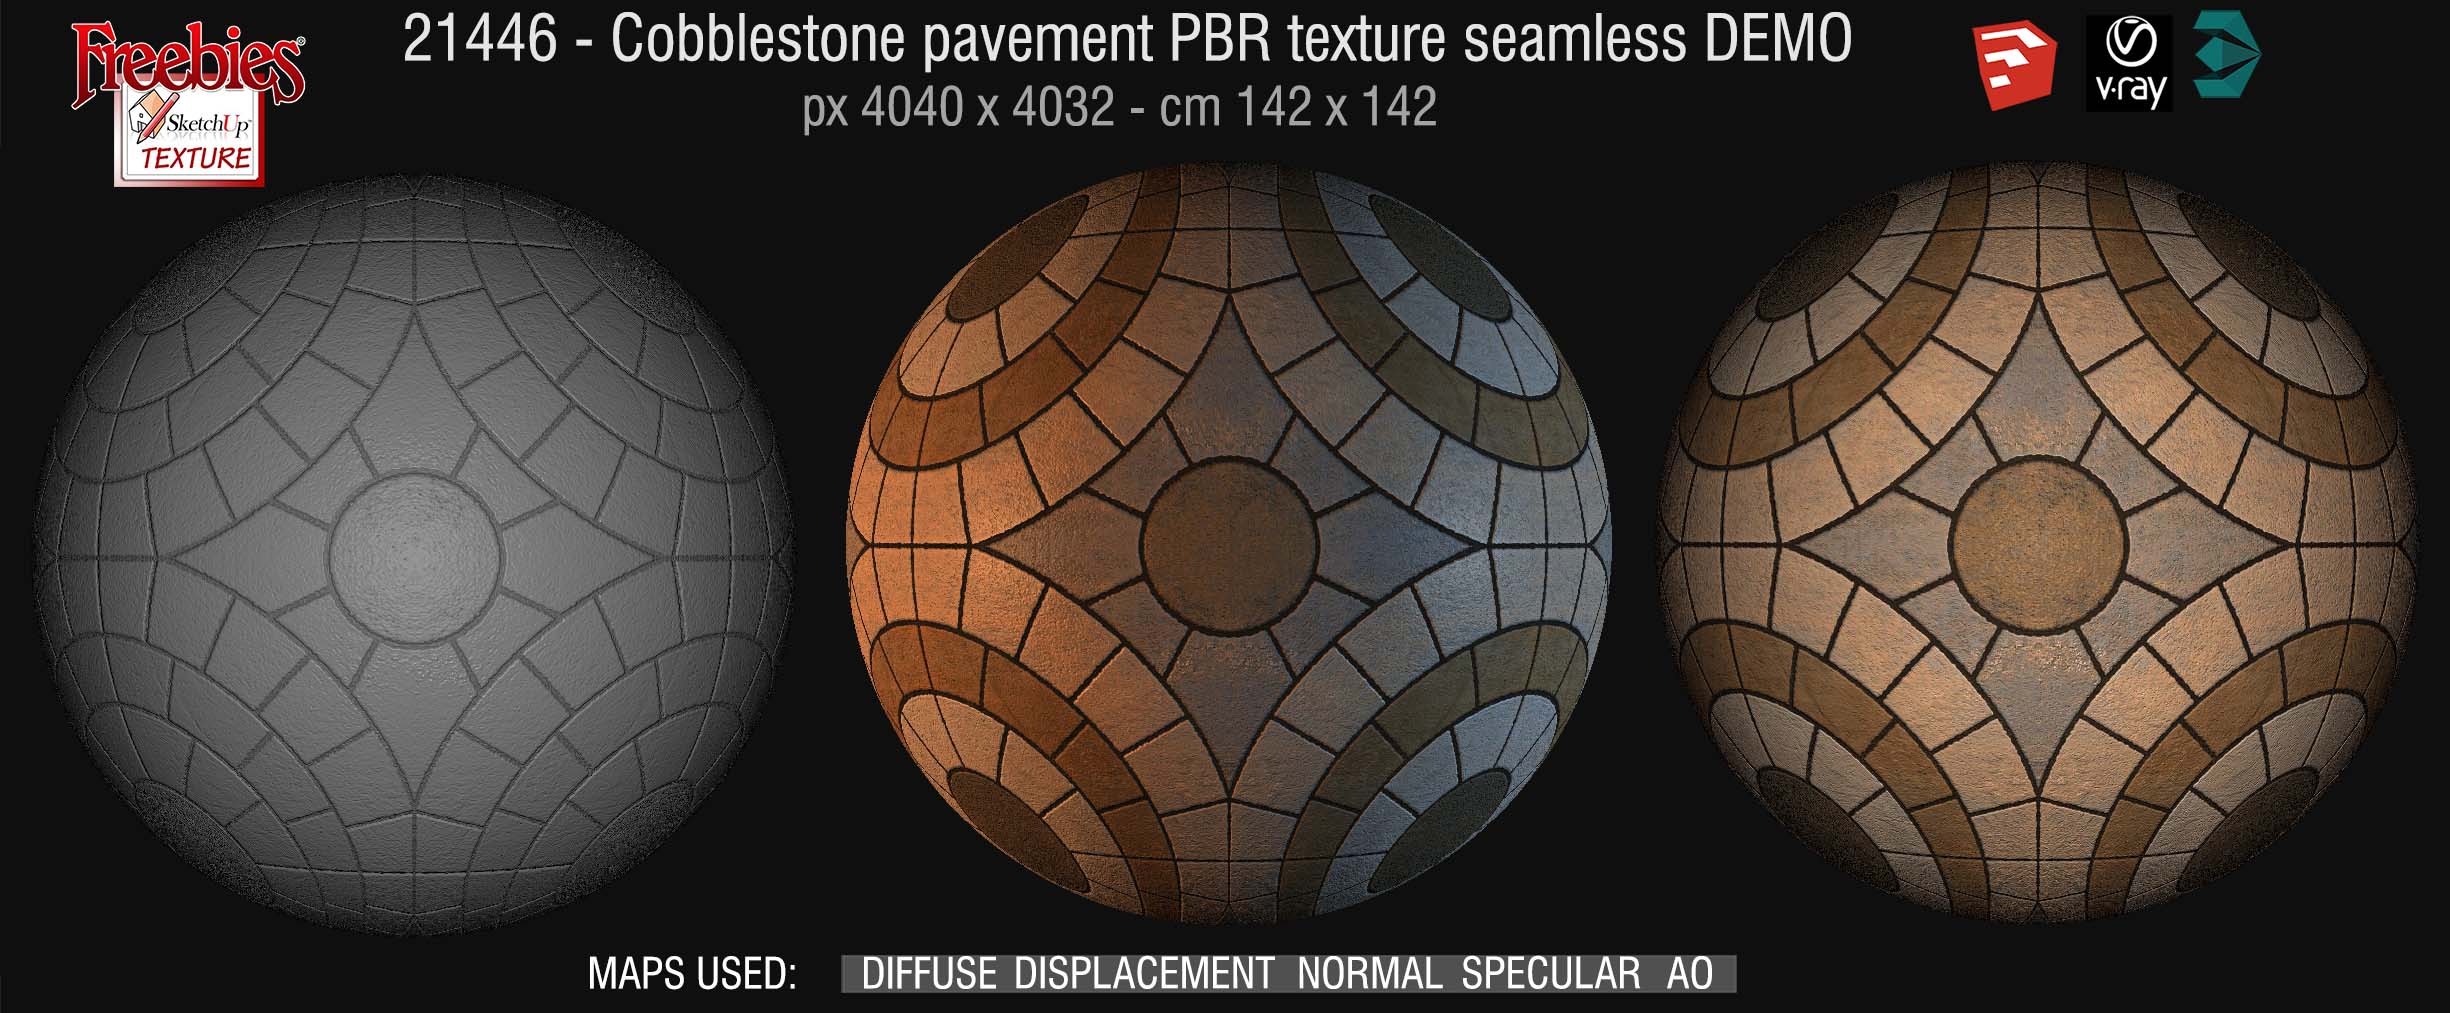 21446 cobblestone pavement PBR texture seamless